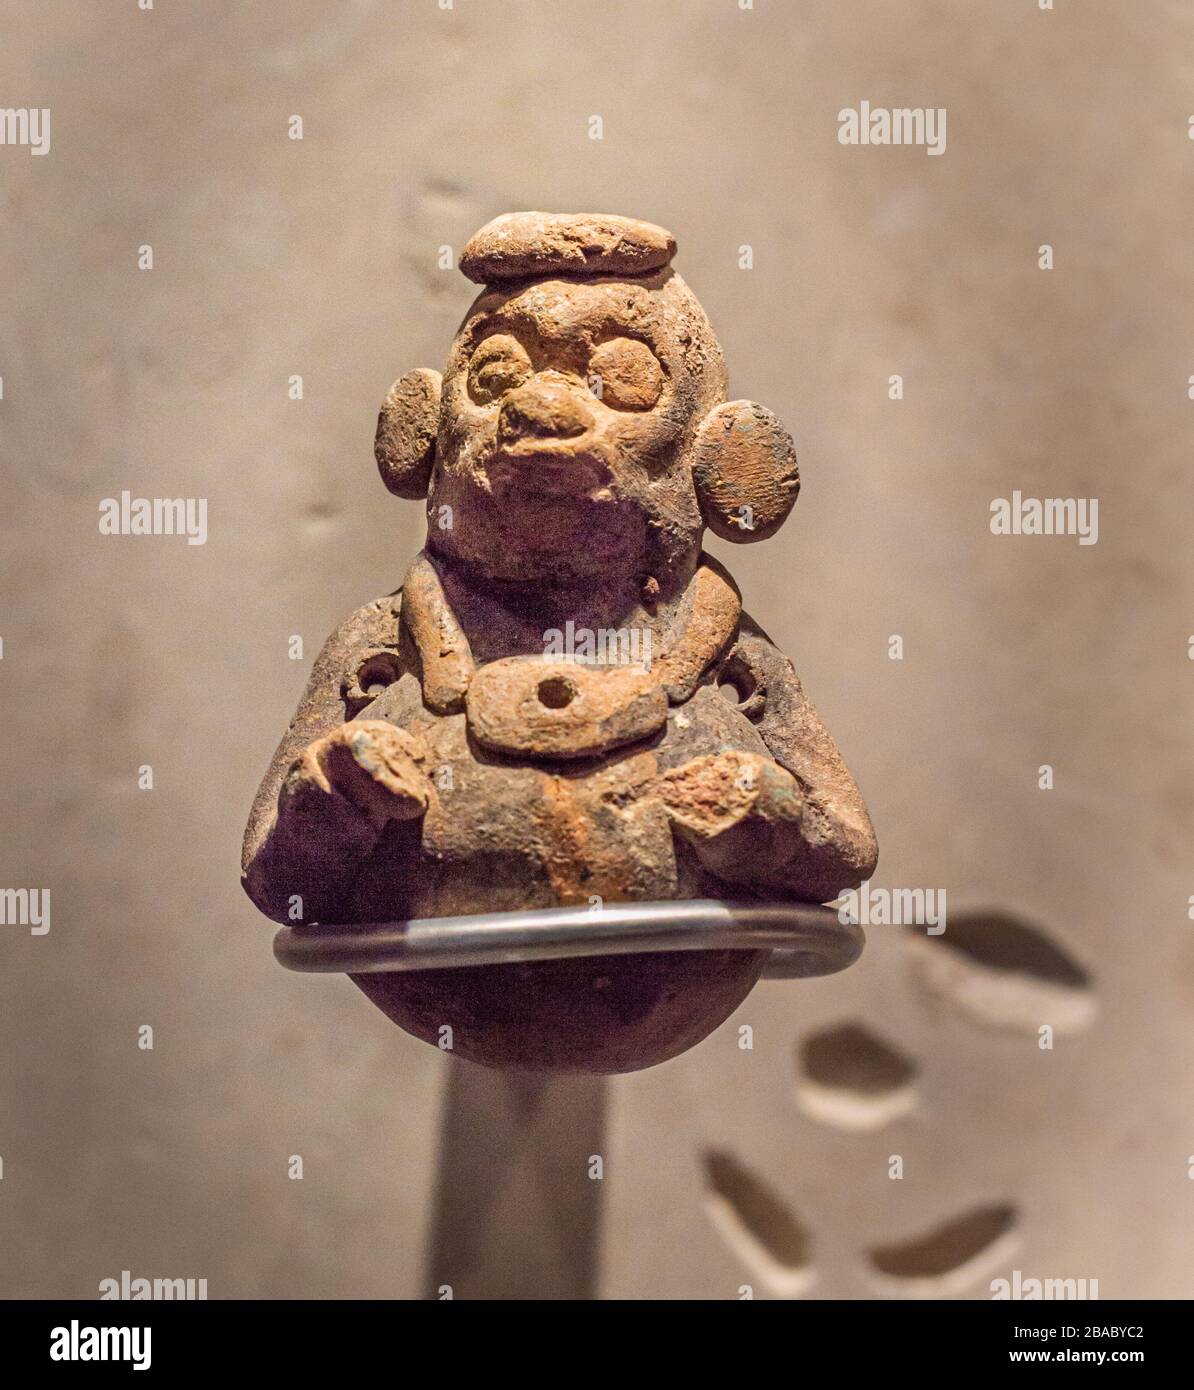 Sifflet maya, instrument de musique ancestral, exposé au musée maya, Merida, Yucatan, Mexique. Banque D'Images